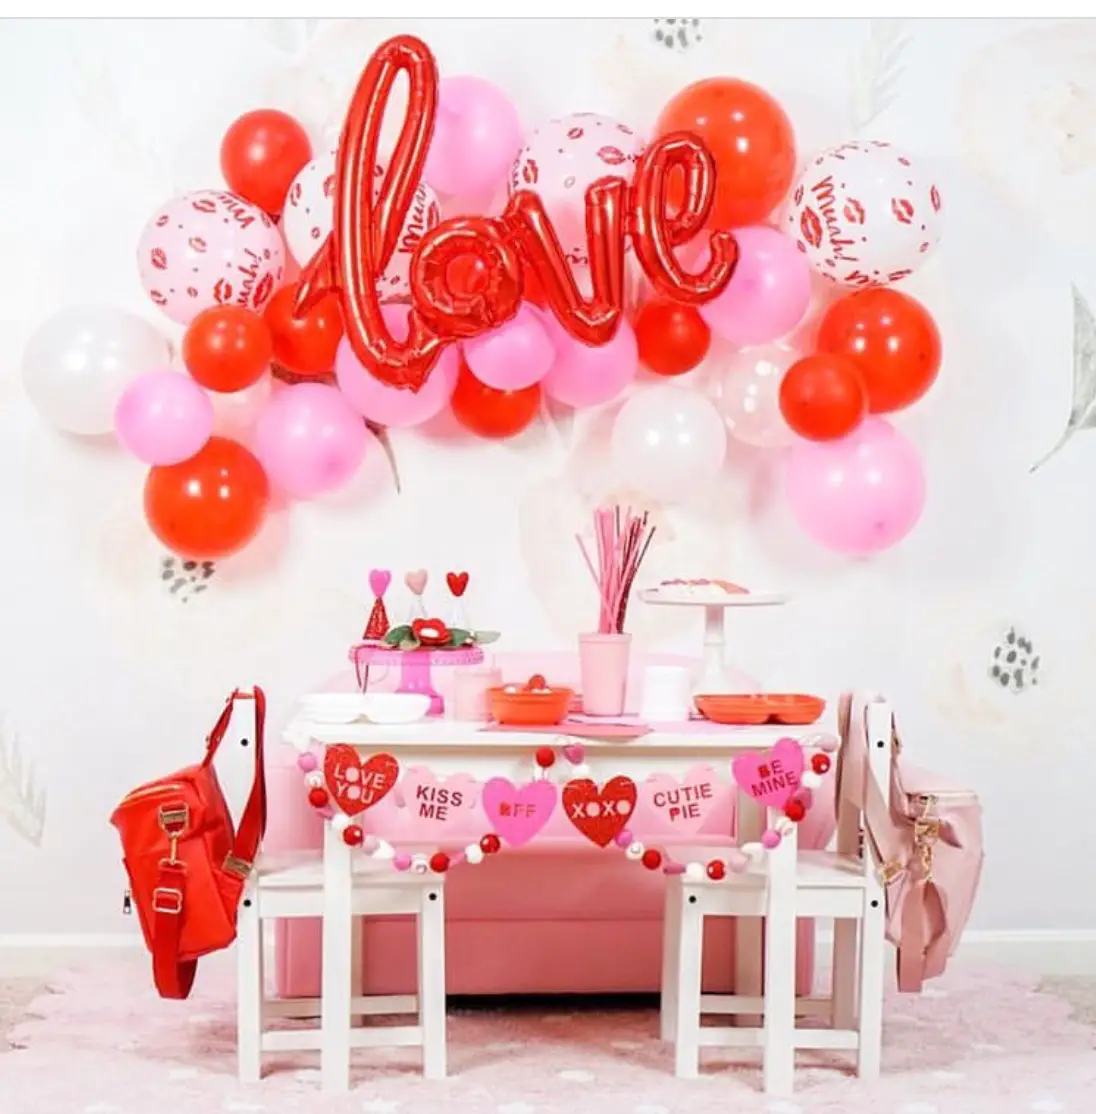 valentine's party decorations